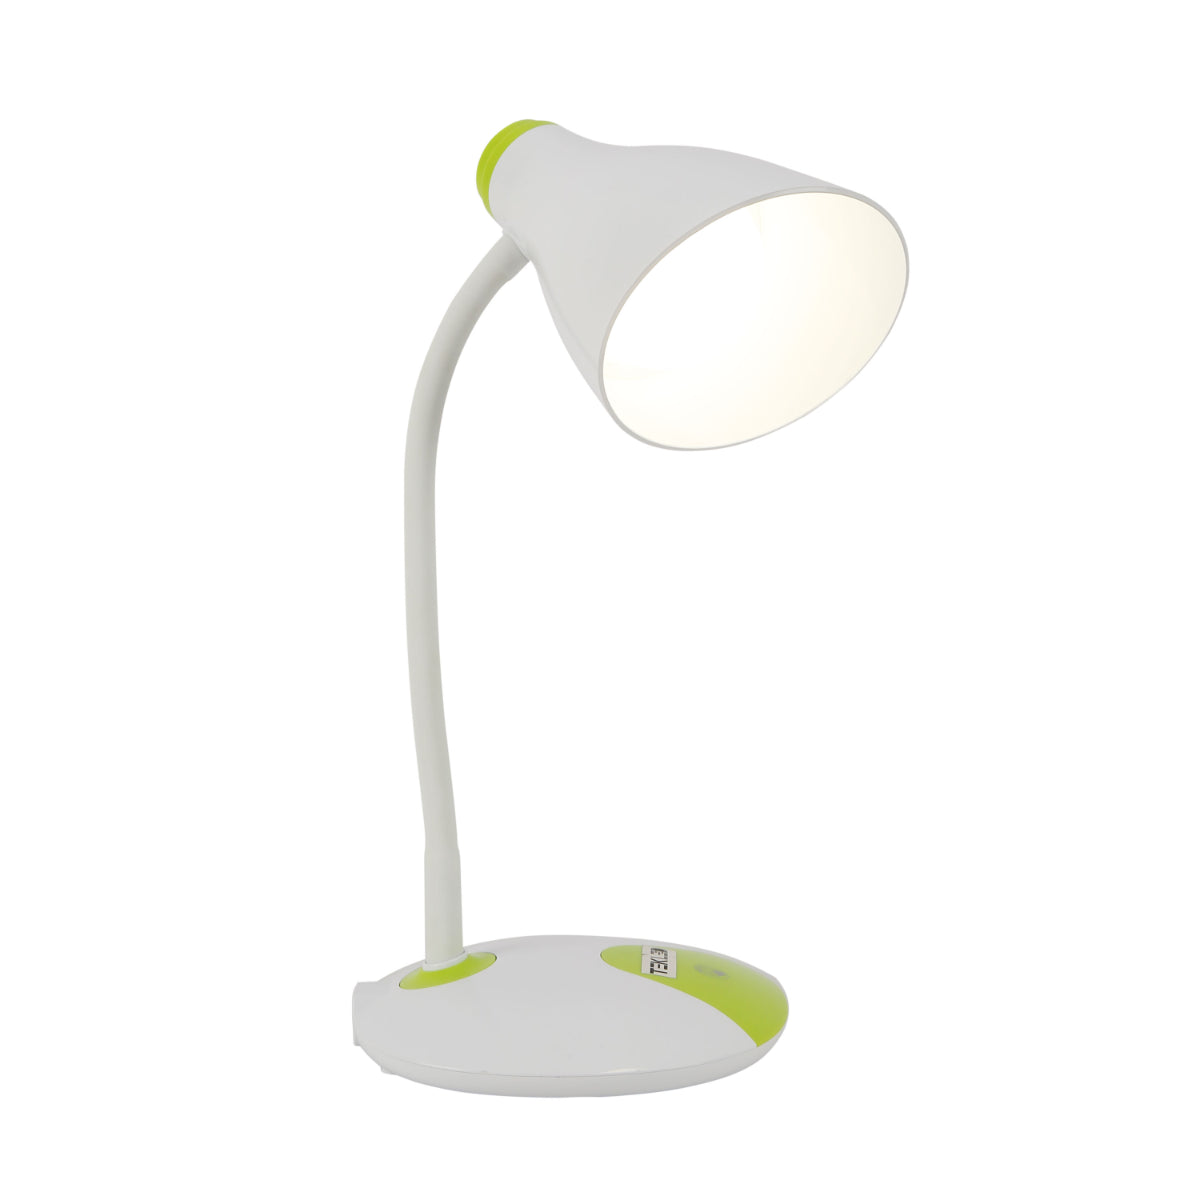 Main image of Adjustable Gooseneck LED Desk Lamp with Dual Colour Design 130-03757